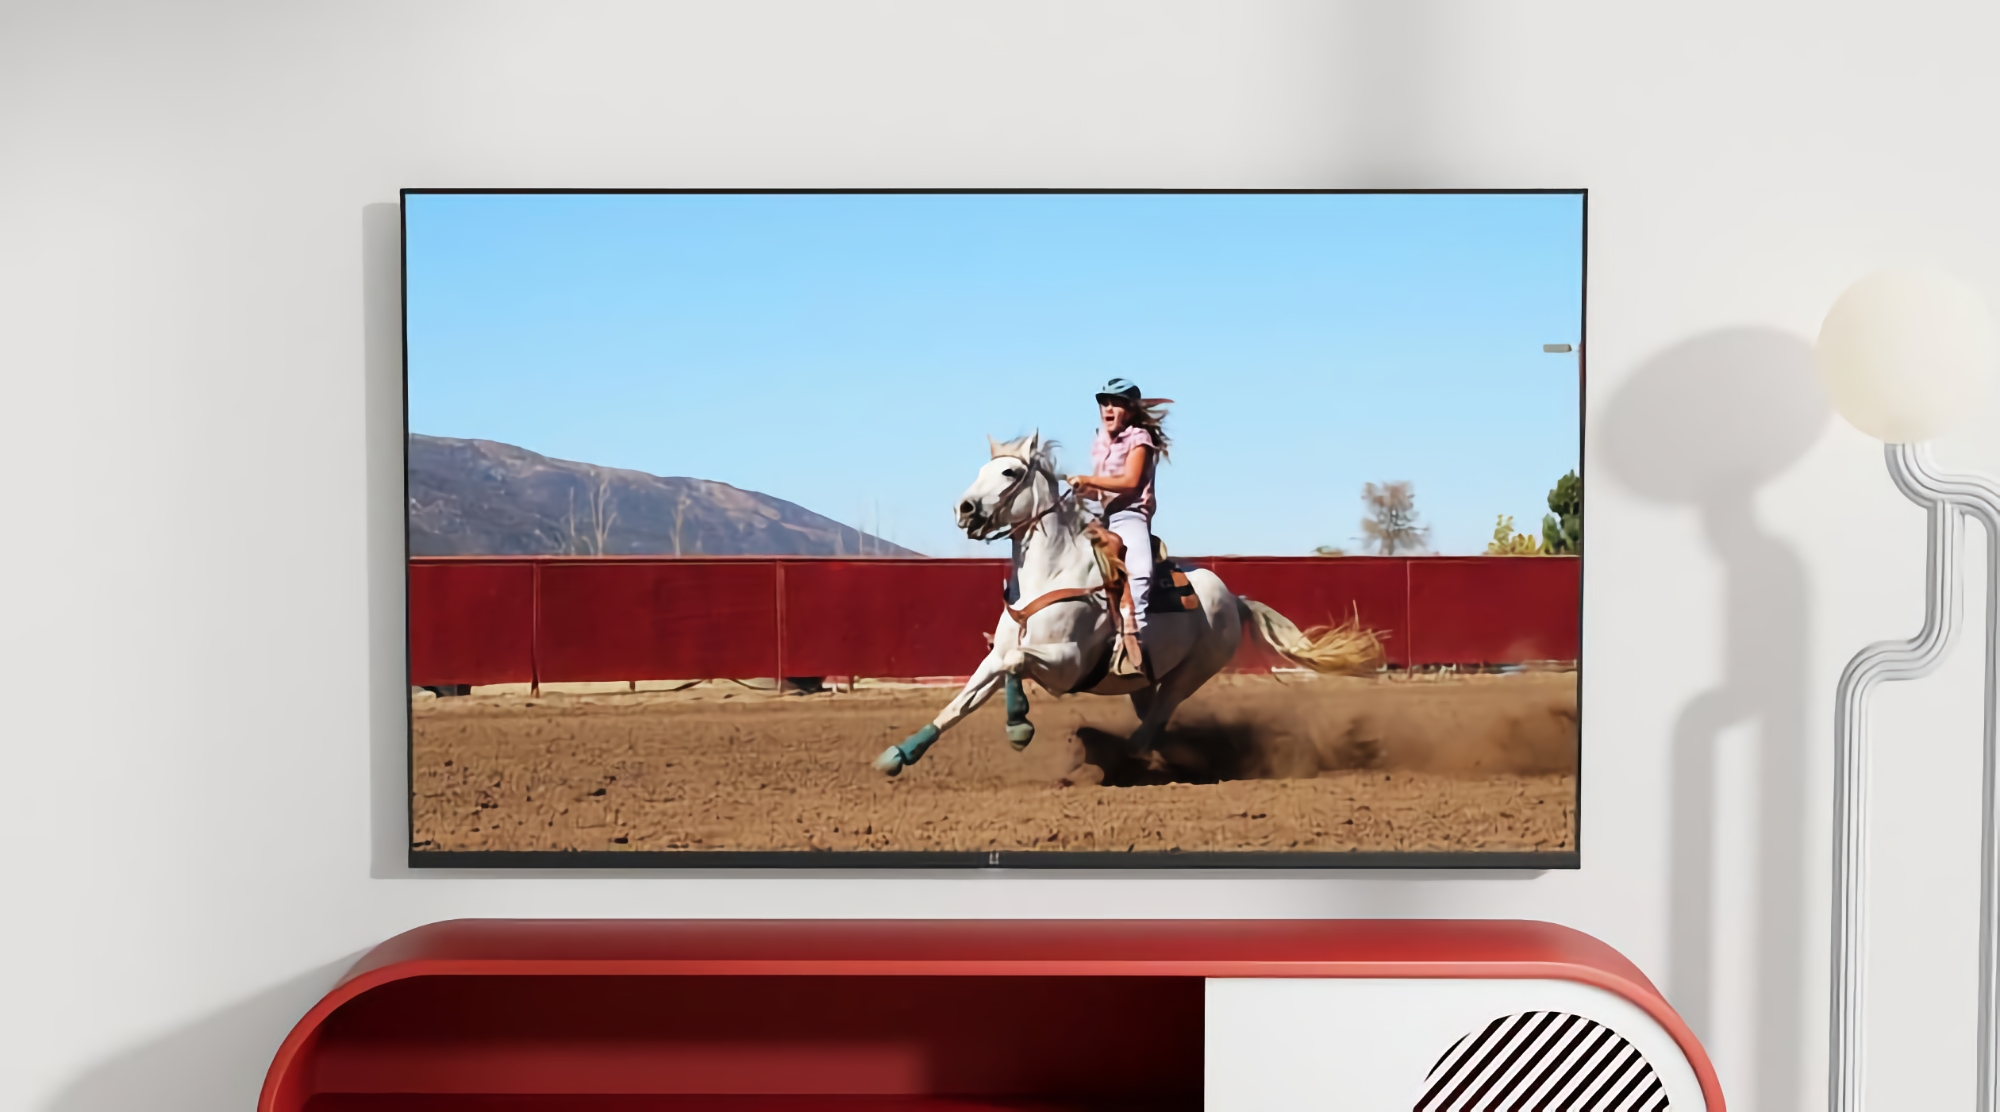 Insider: OnePlus prepara un nuevo televisor inteligente de 55 pulgadas con pantalla LED